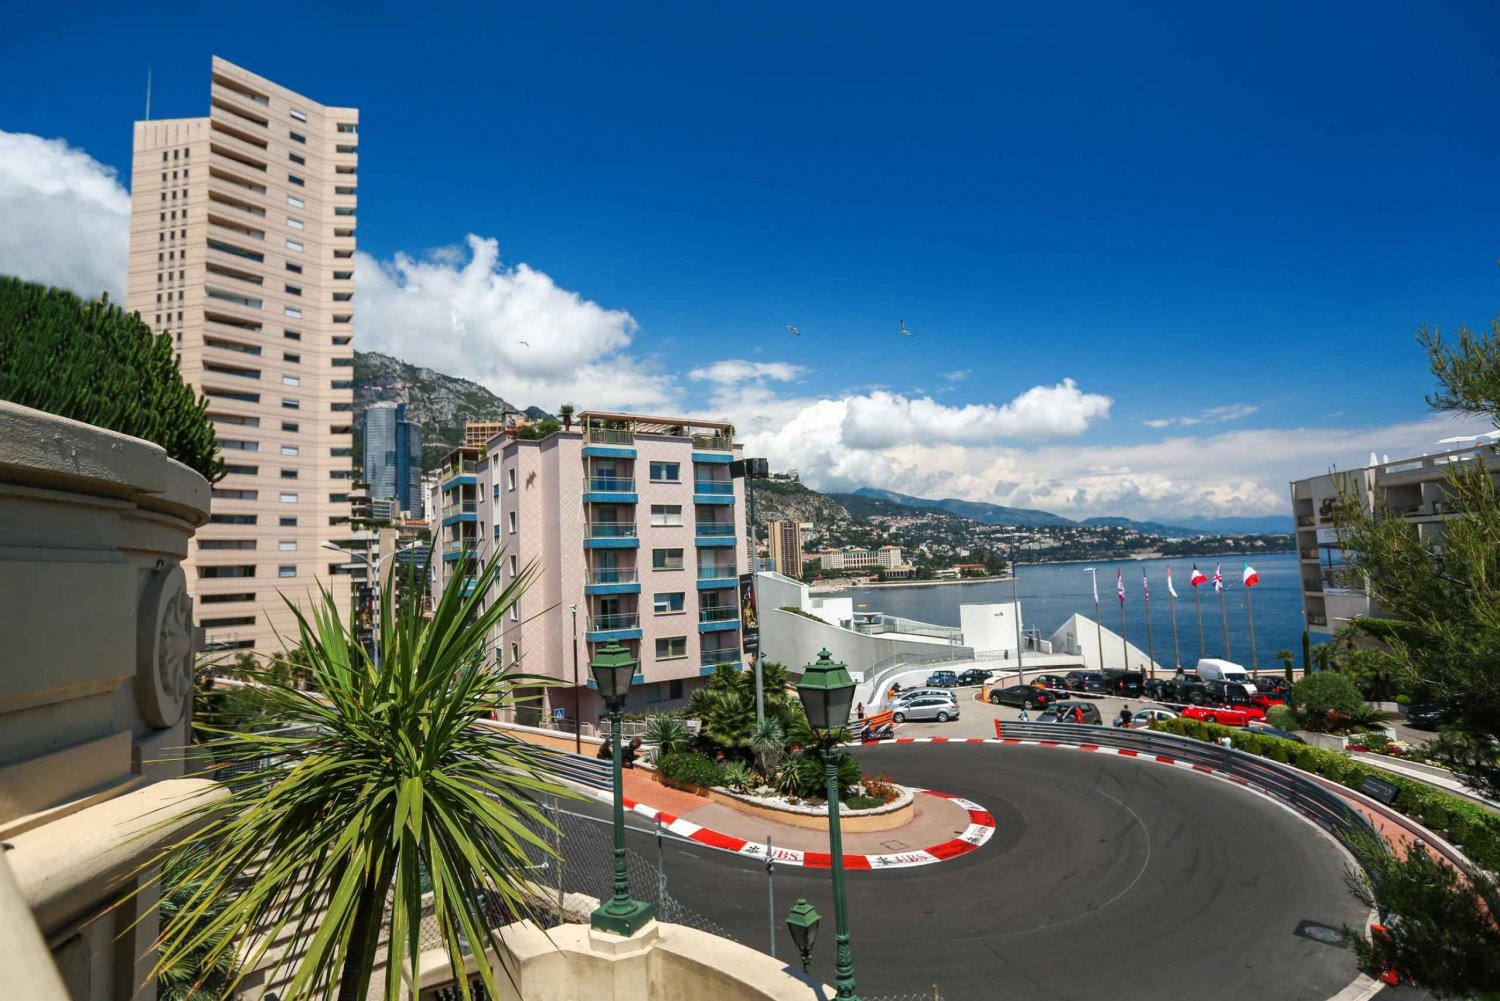 From Nice: Full-Day Monaco, Monte-Carlo & Eze Tour